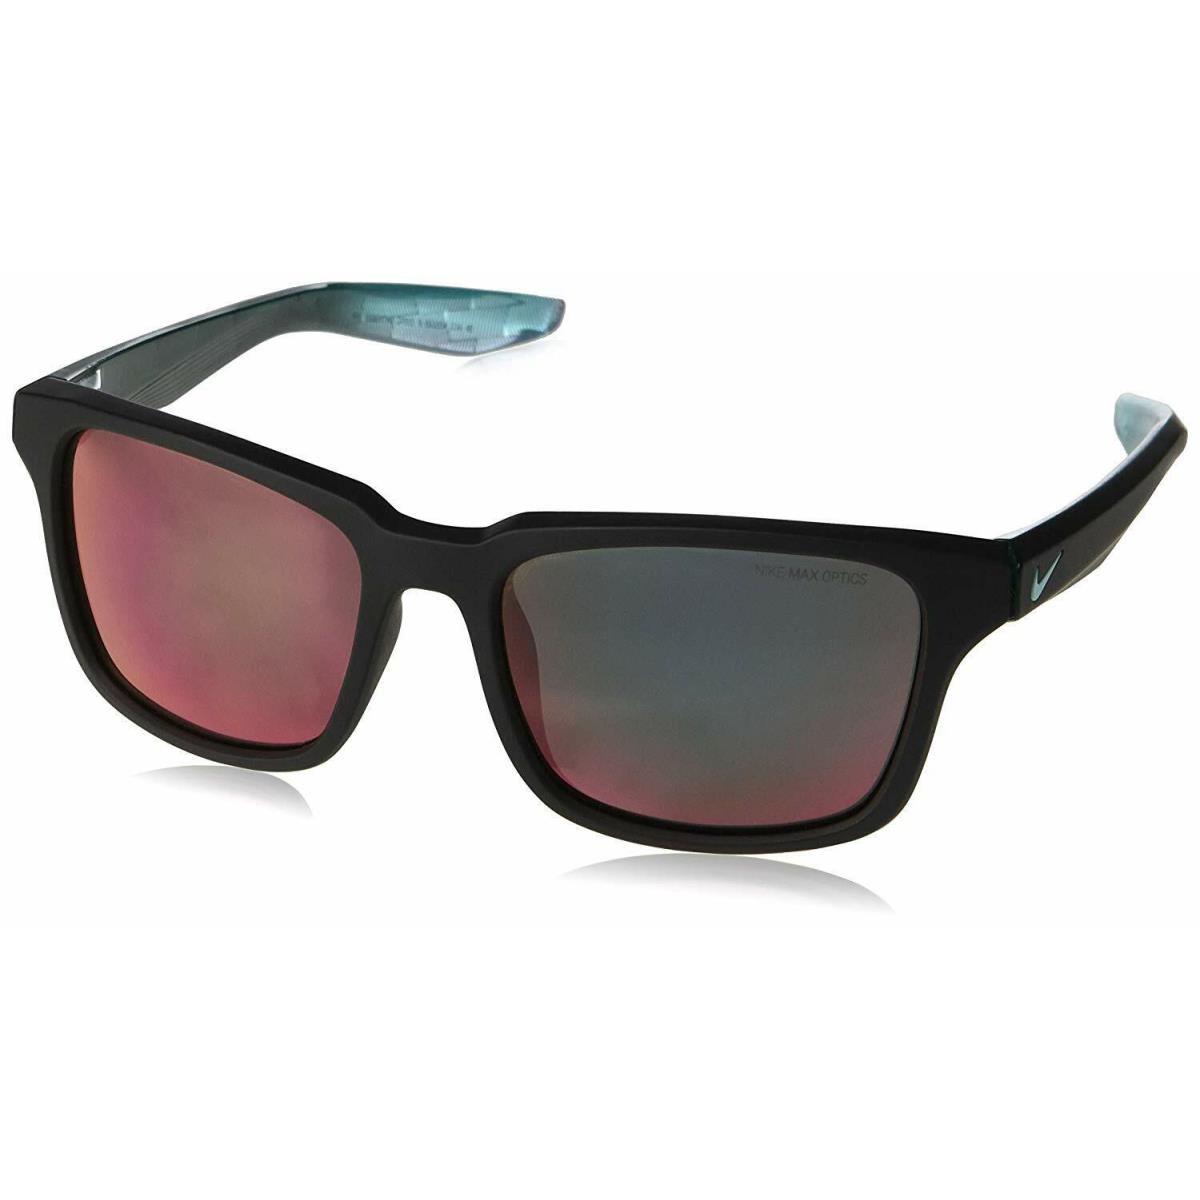 Nike Essential Spree R Black Aurora Prism Unisex Square Sunglasses 57mm - Frame: MATTE BLACK/AURORA GREEN PRISM, Lens: